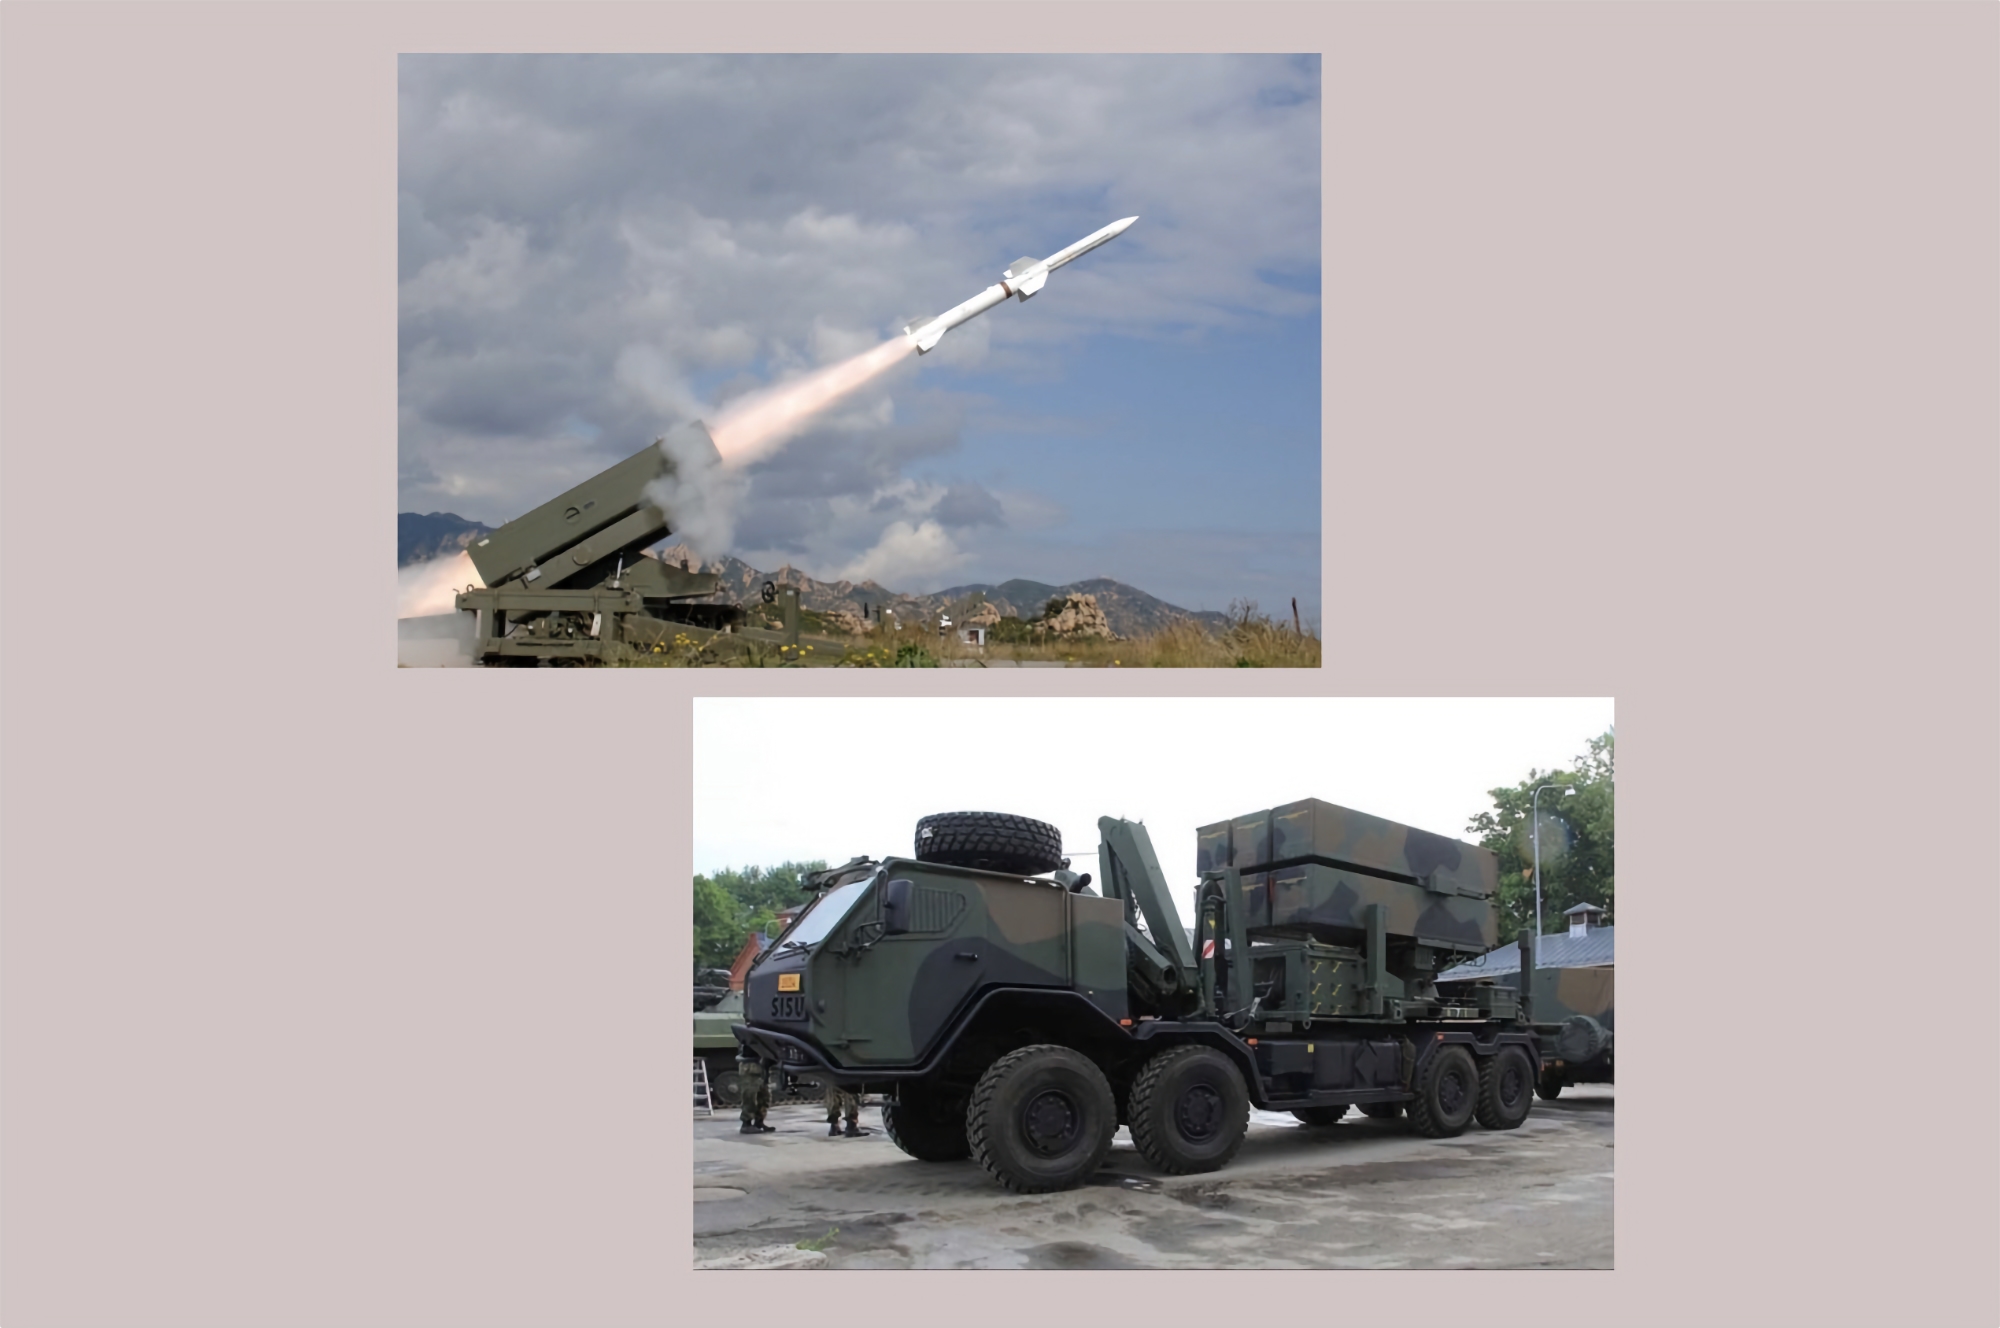 Una grande aggiunta all'IRIS-T! L'Ucraina ha ricevuto i sistemi missilistici terra-aria NASAMS e Aspide